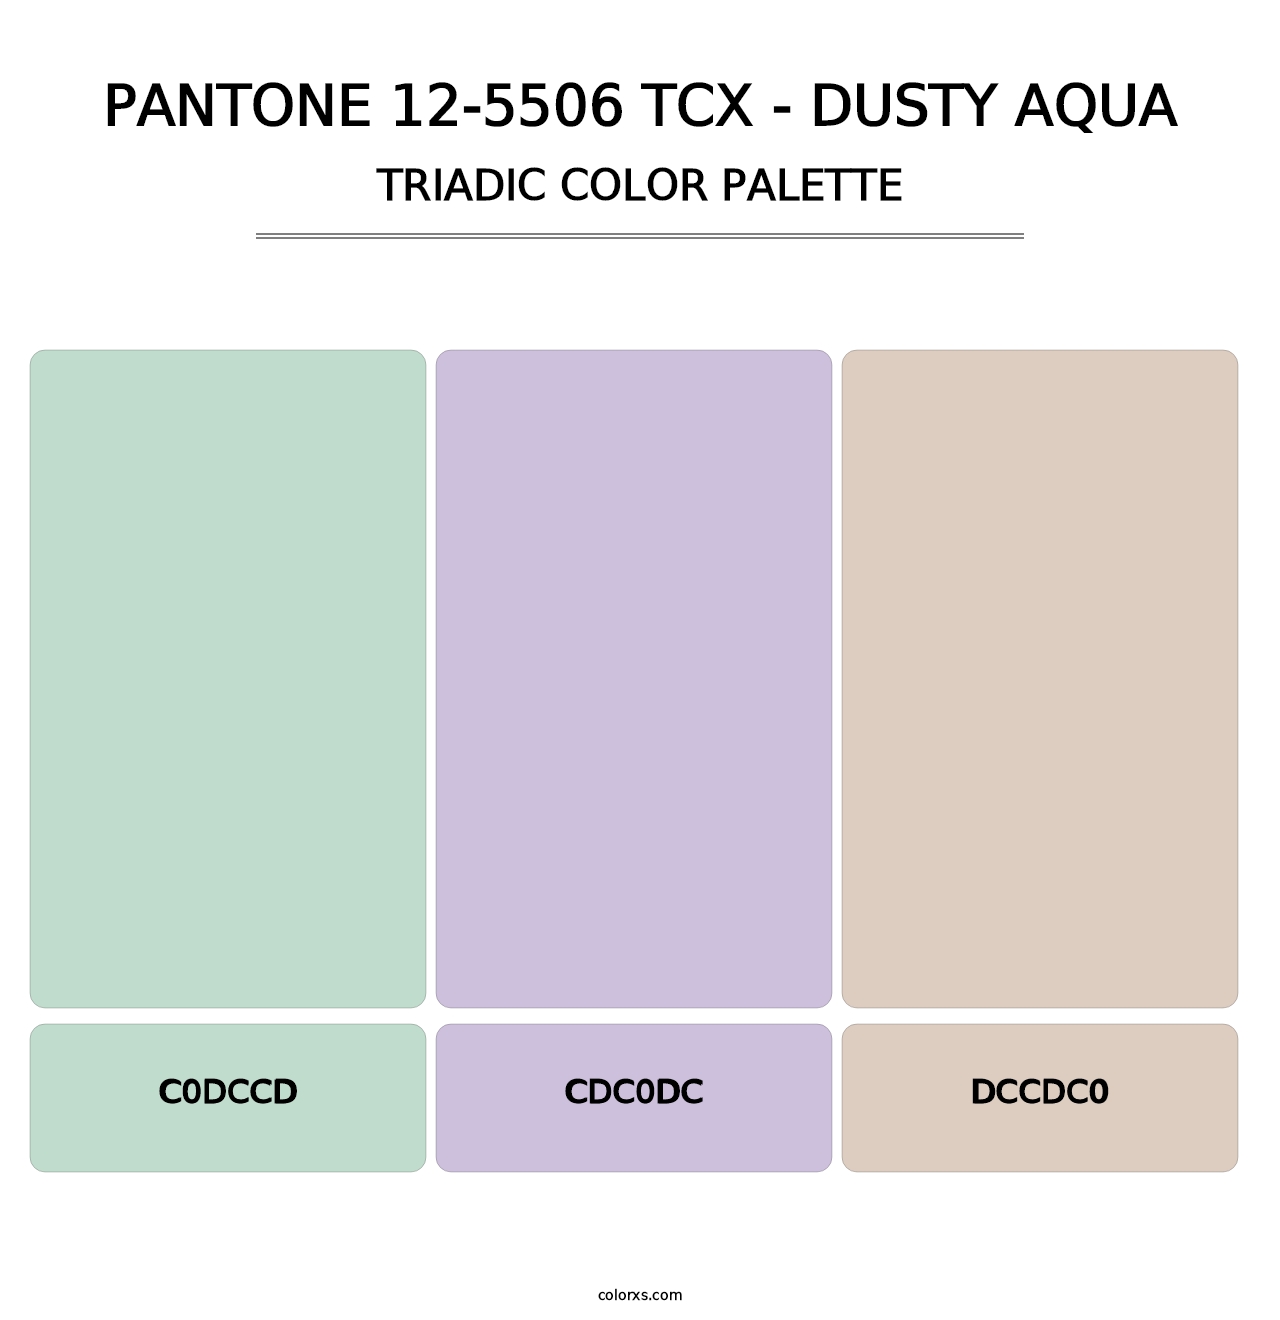 PANTONE 12-5506 TCX - Dusty Aqua - Triadic Color Palette